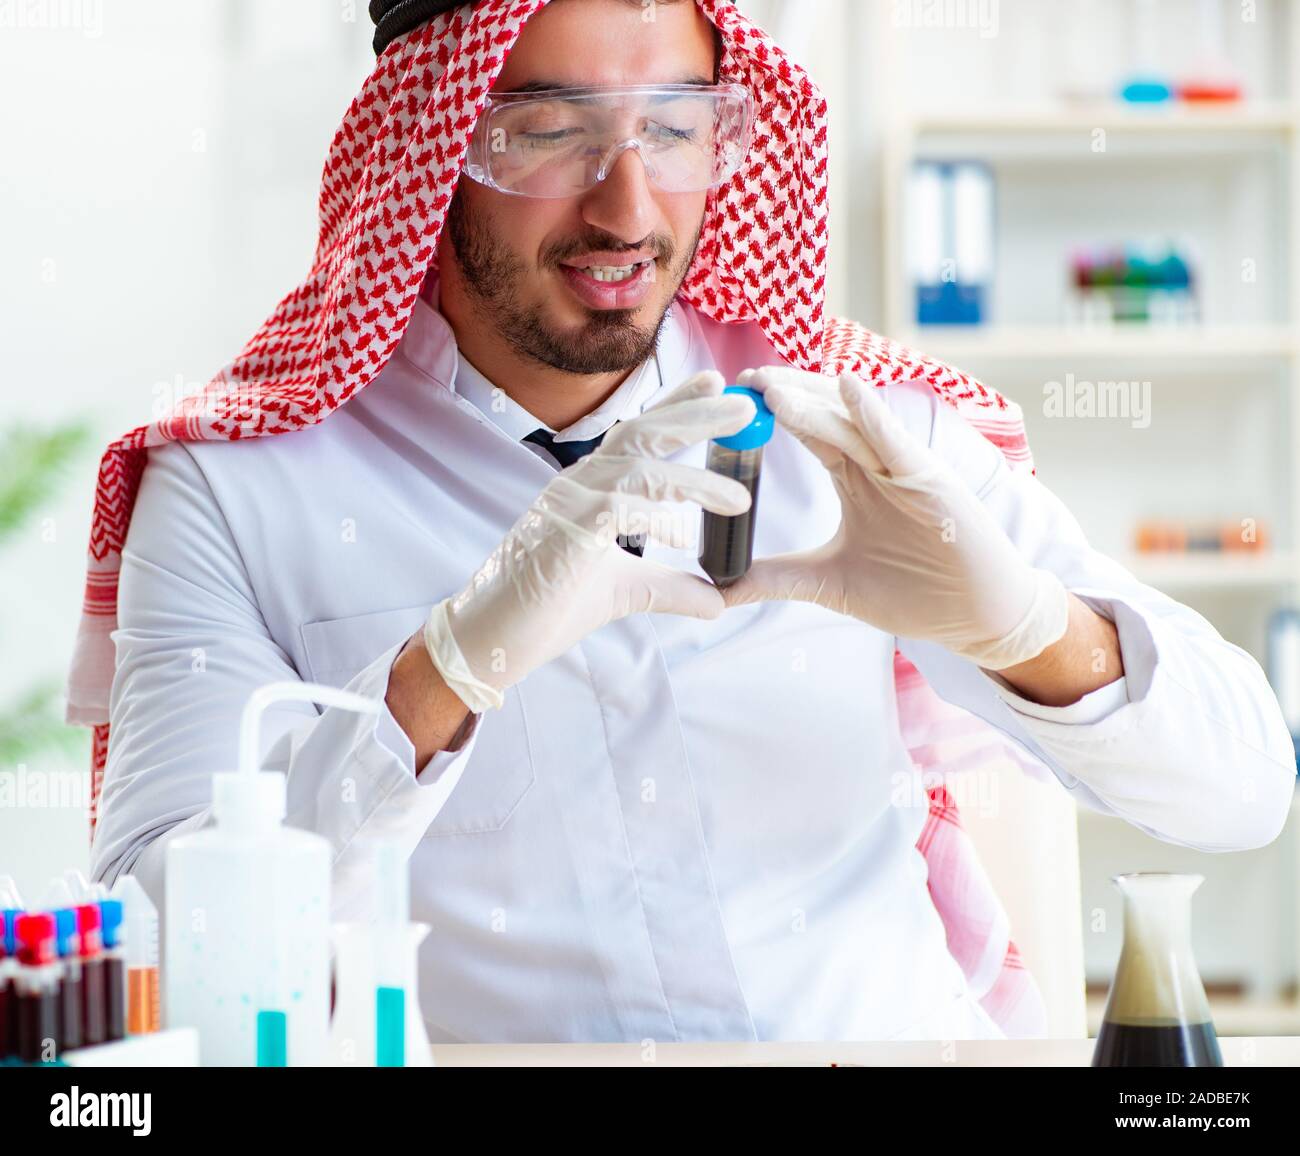 Arab chemist scientist testing quality of oil petrol Stock Photo